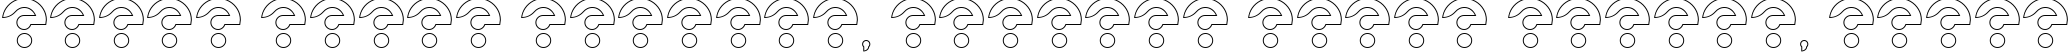 Пример написания шрифтом KIOSHIMA-Outlined текста на белорусском